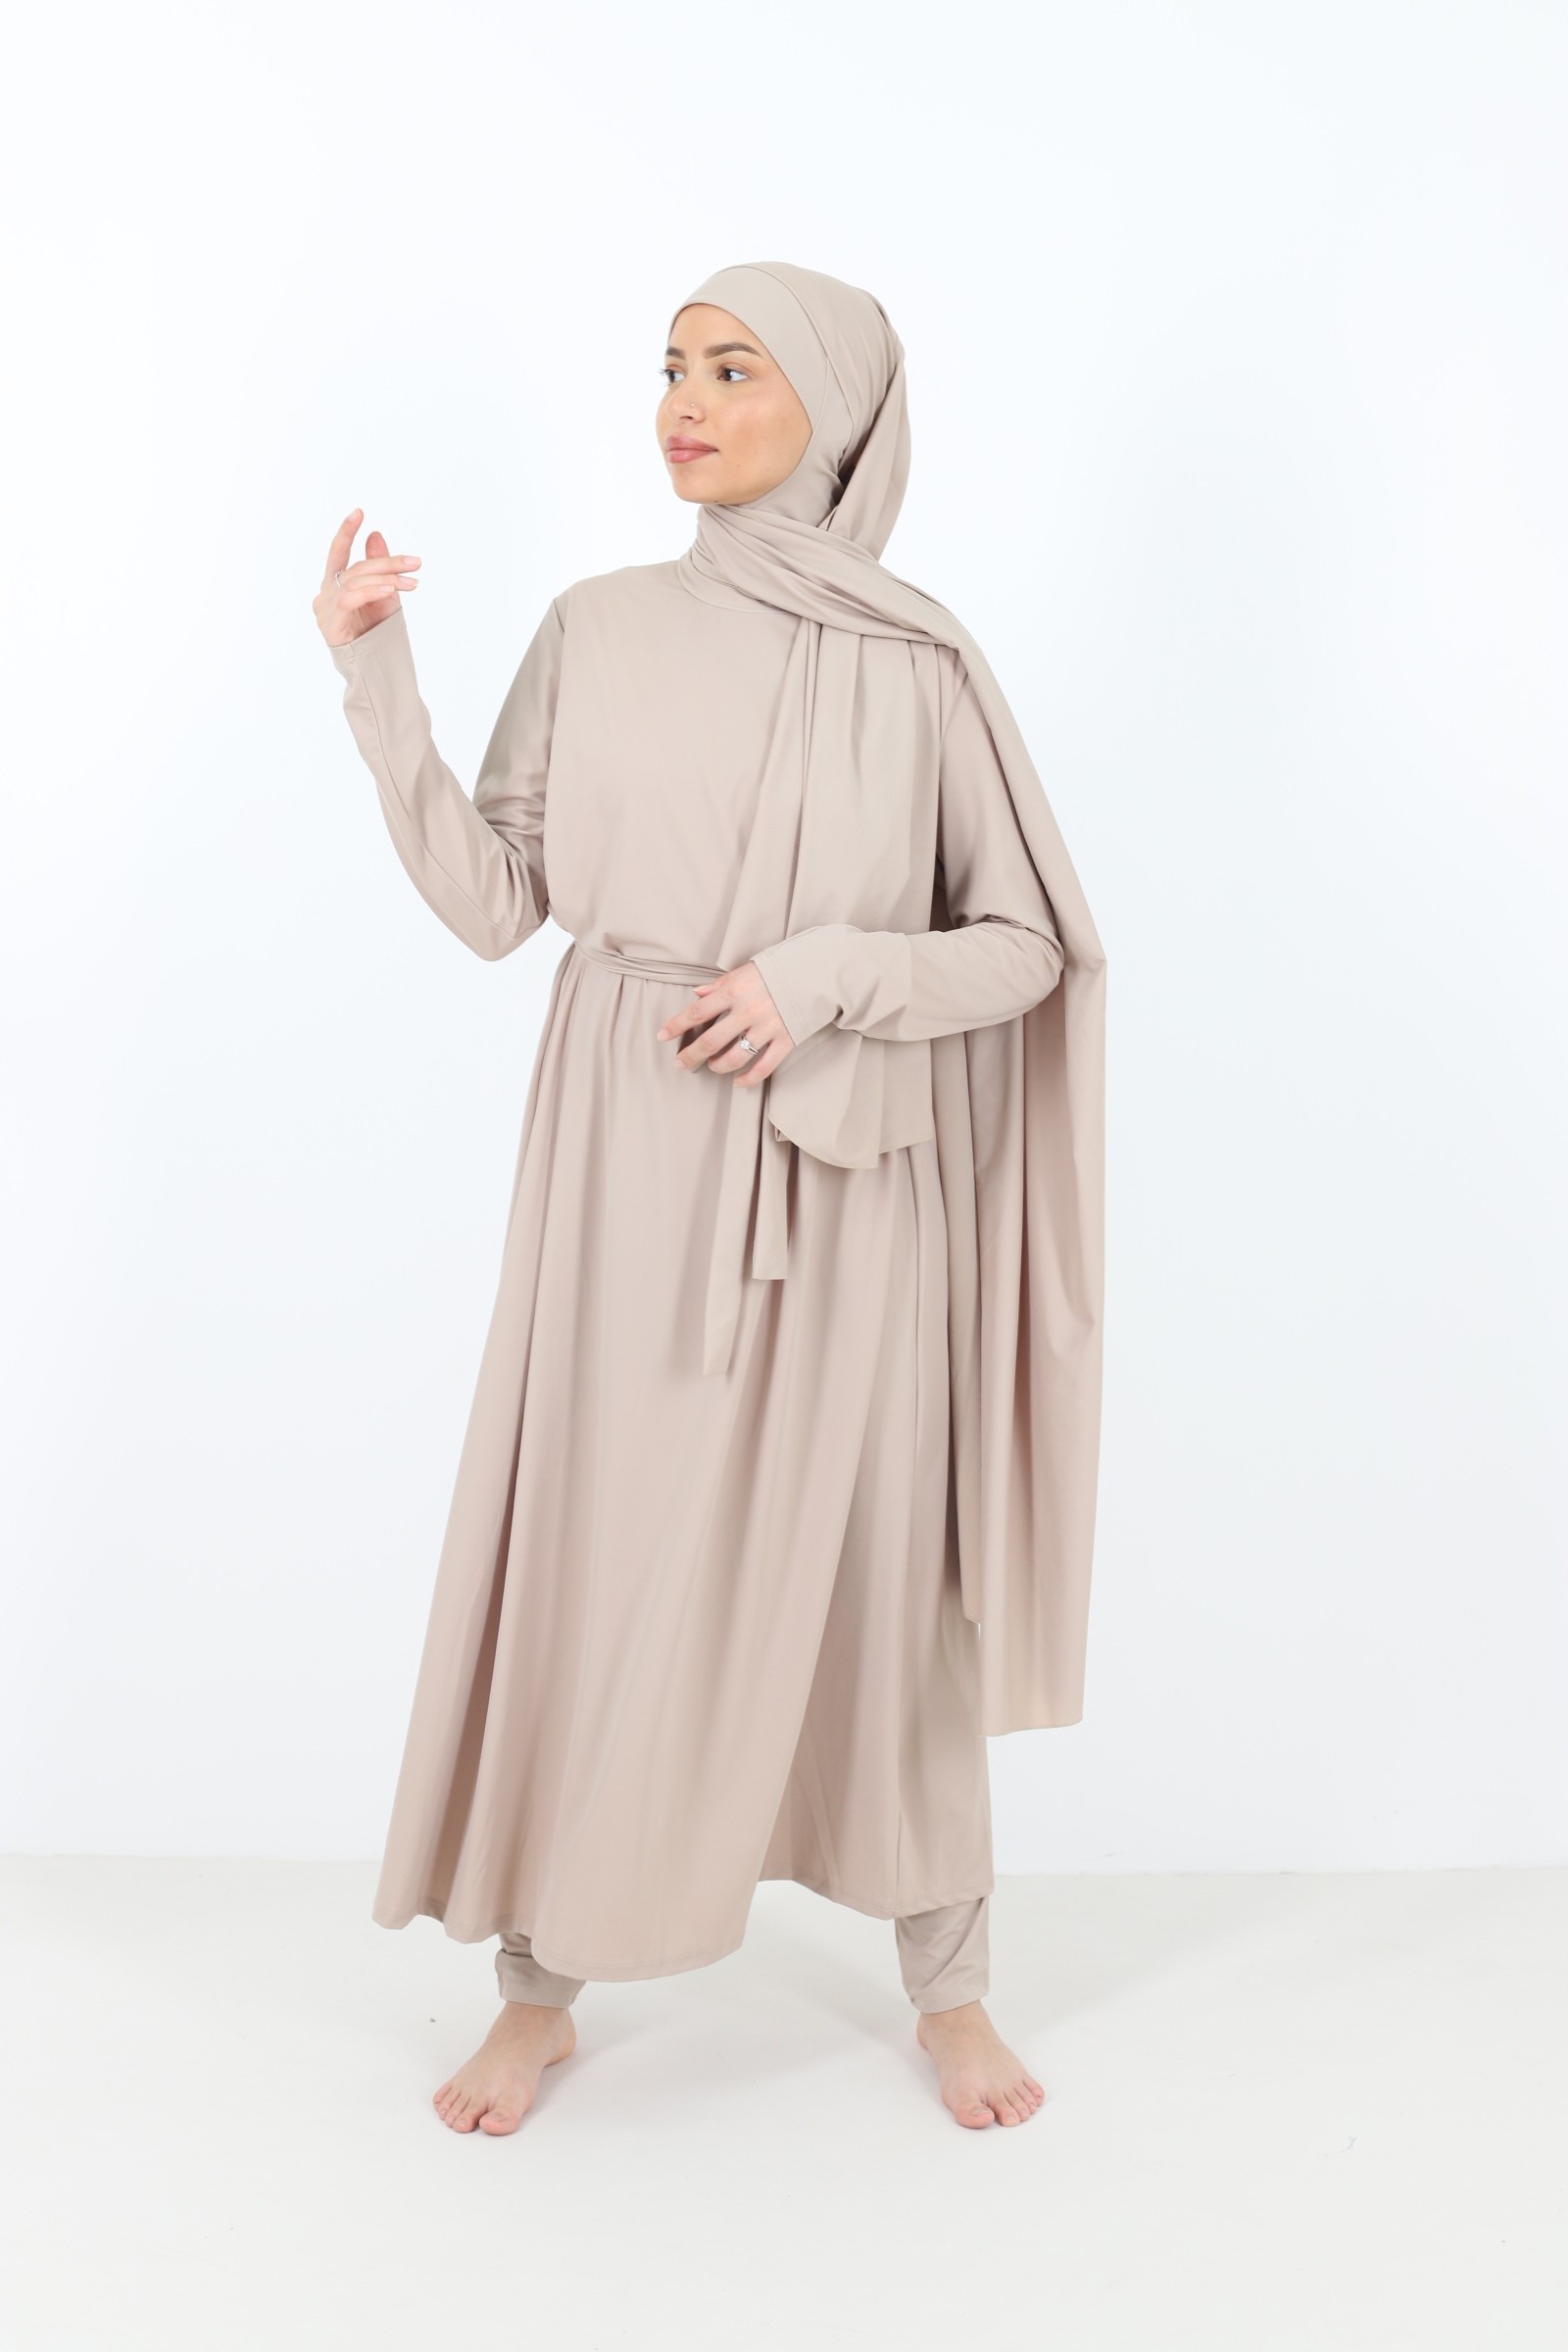 Burkini mastour femme moderne musulmane maillot de bain musulman 